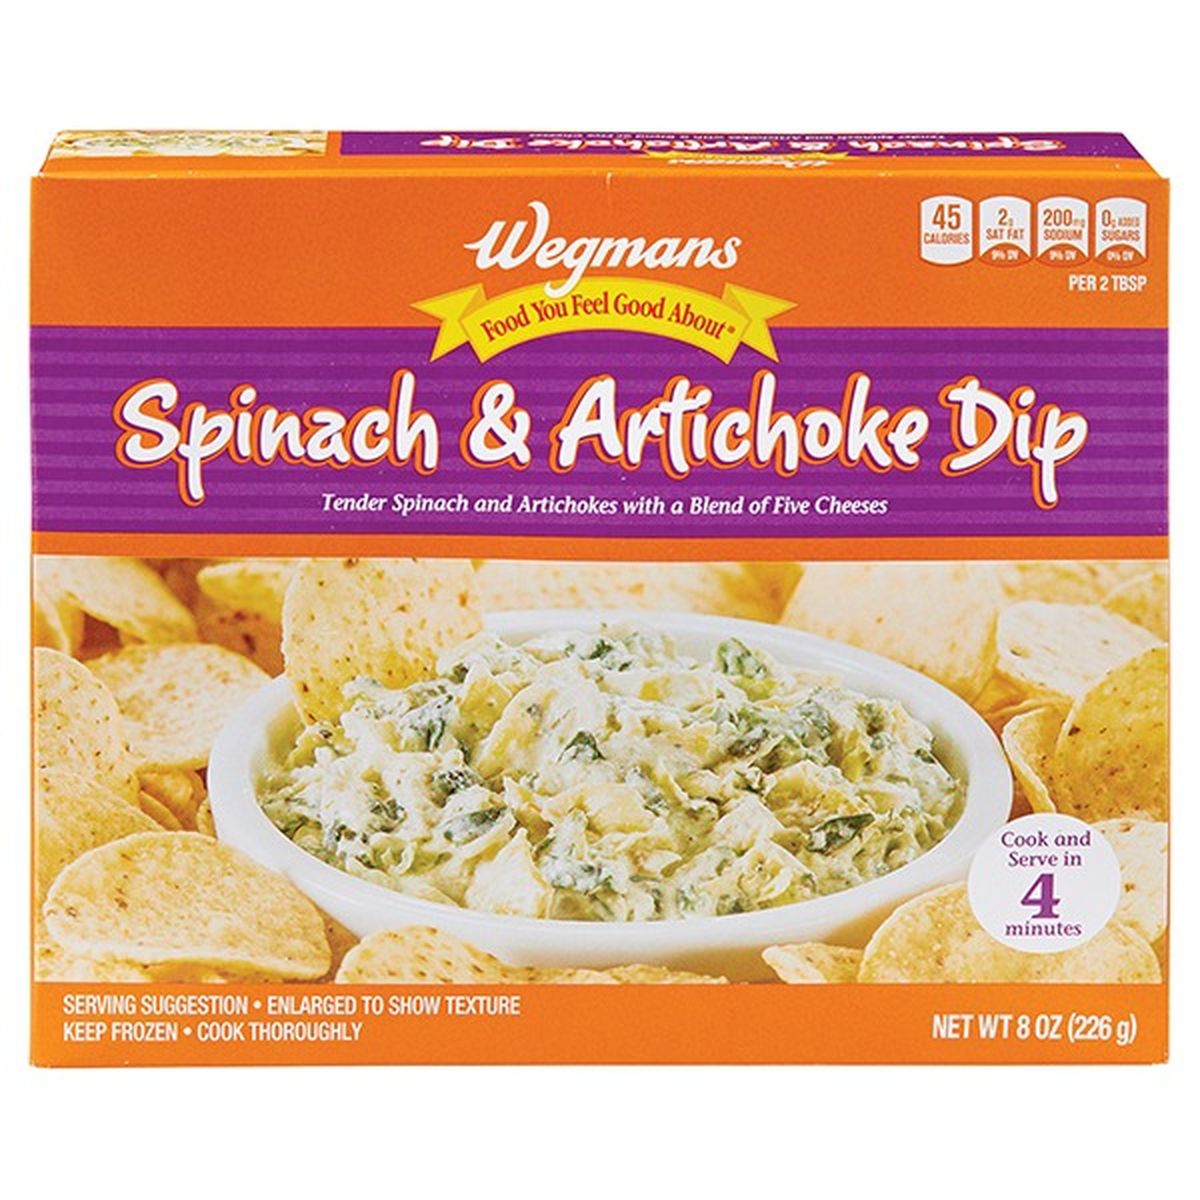 Calories in Wegmans Spinach Artichoke Dip